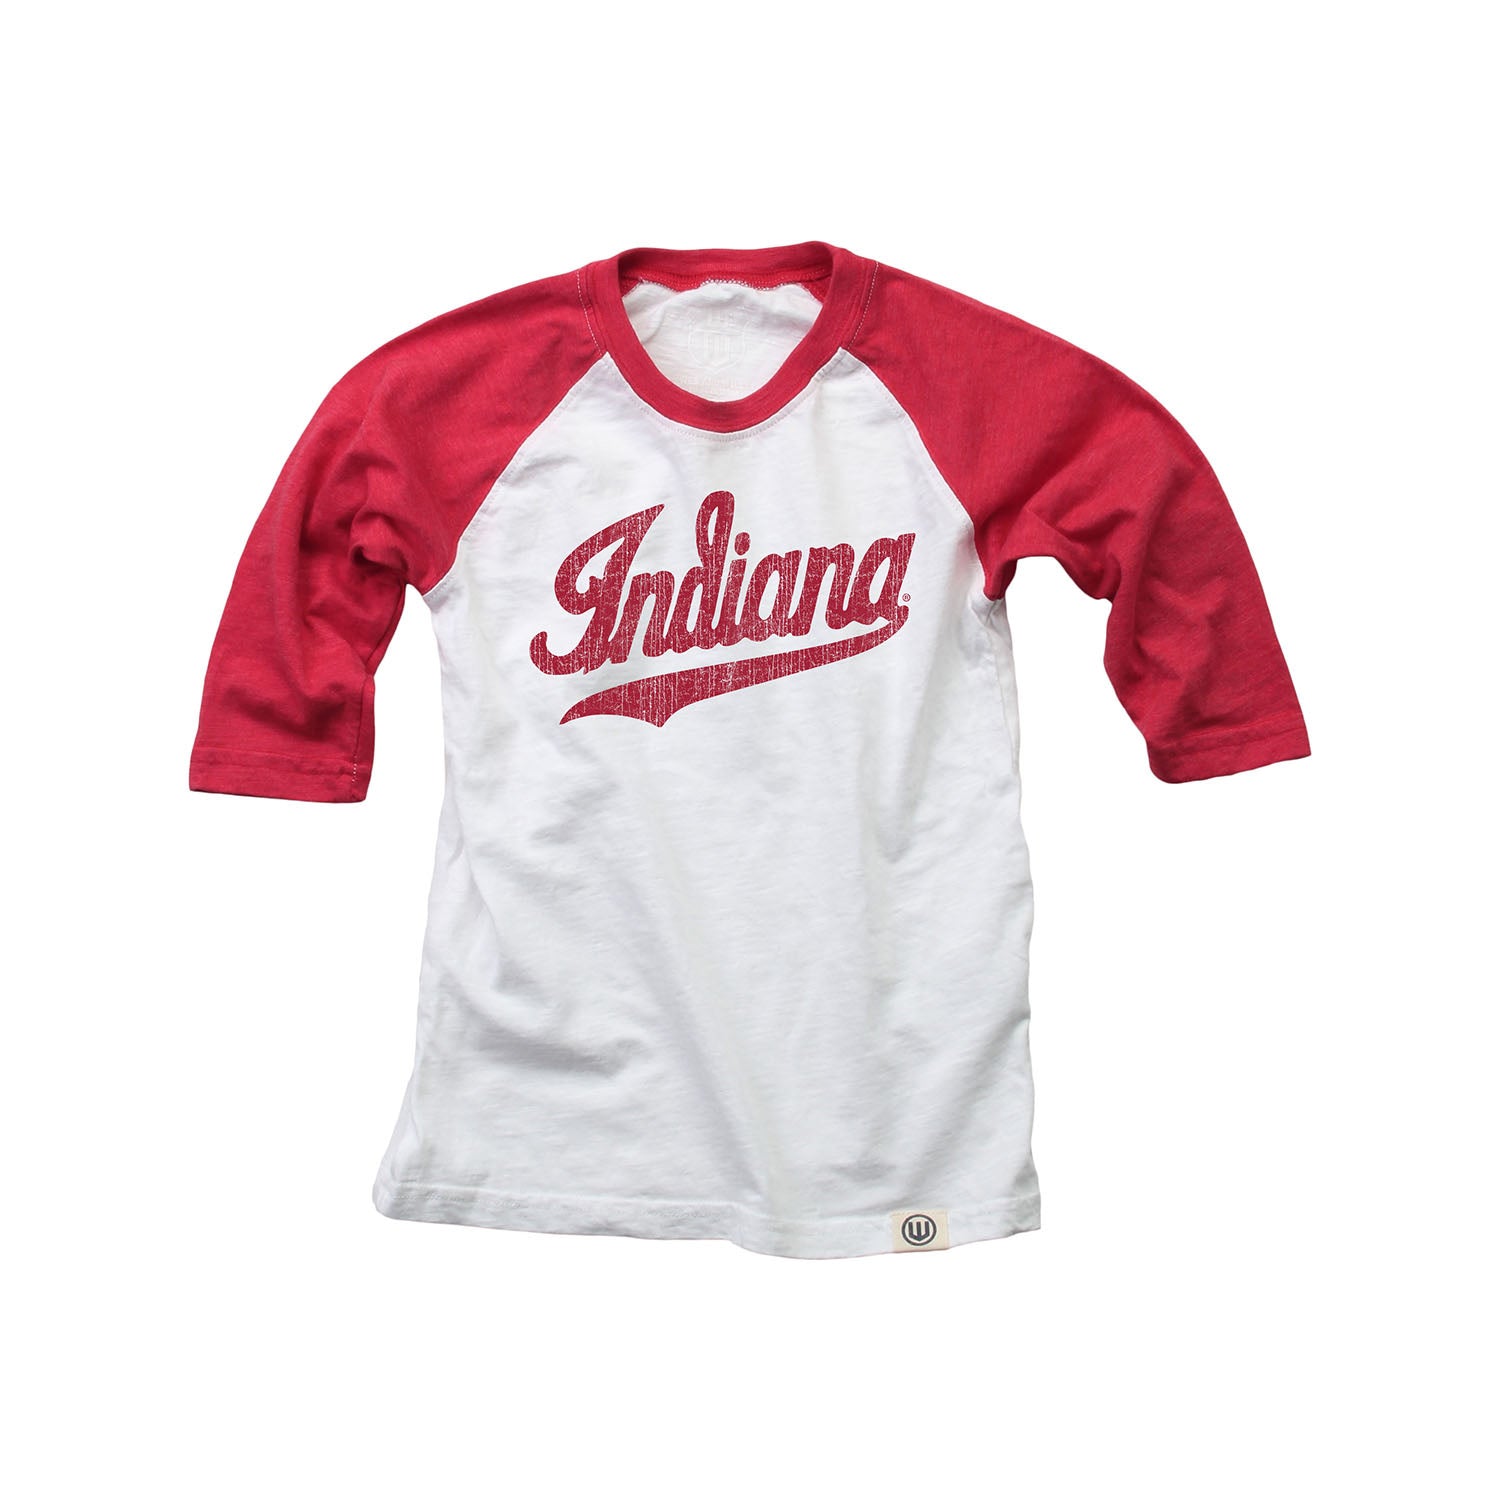 Indiana Jones Jersey T-Shirt, Indiana Jones Baseball Jersey T-Shirt